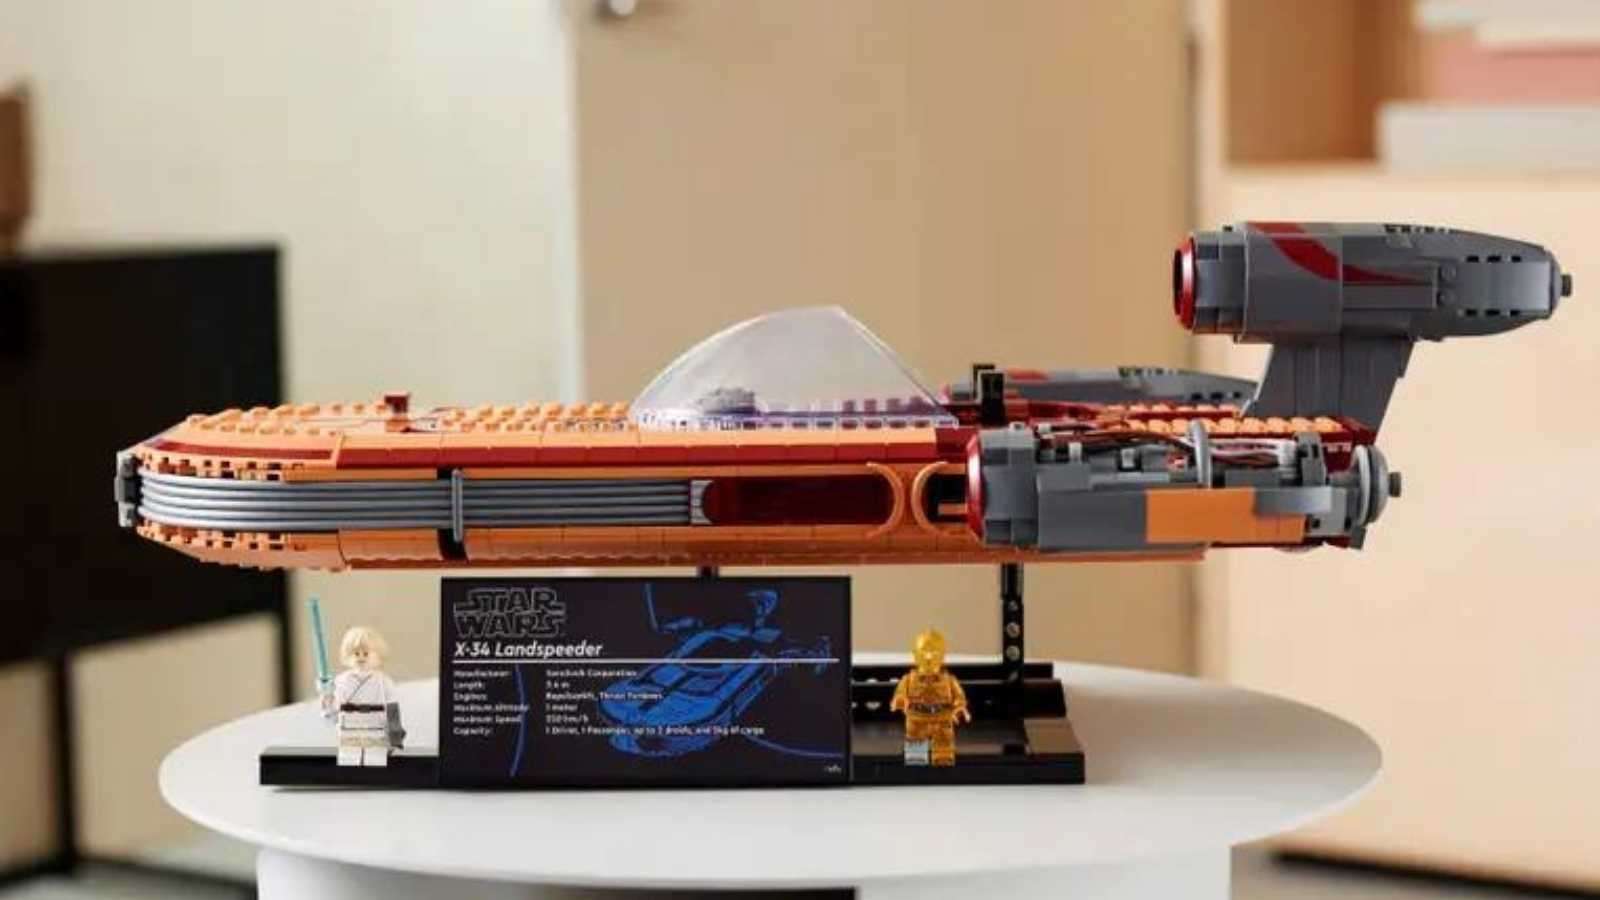 The LEGO Star Wars Luke Skywalker’s Landspeeder on display